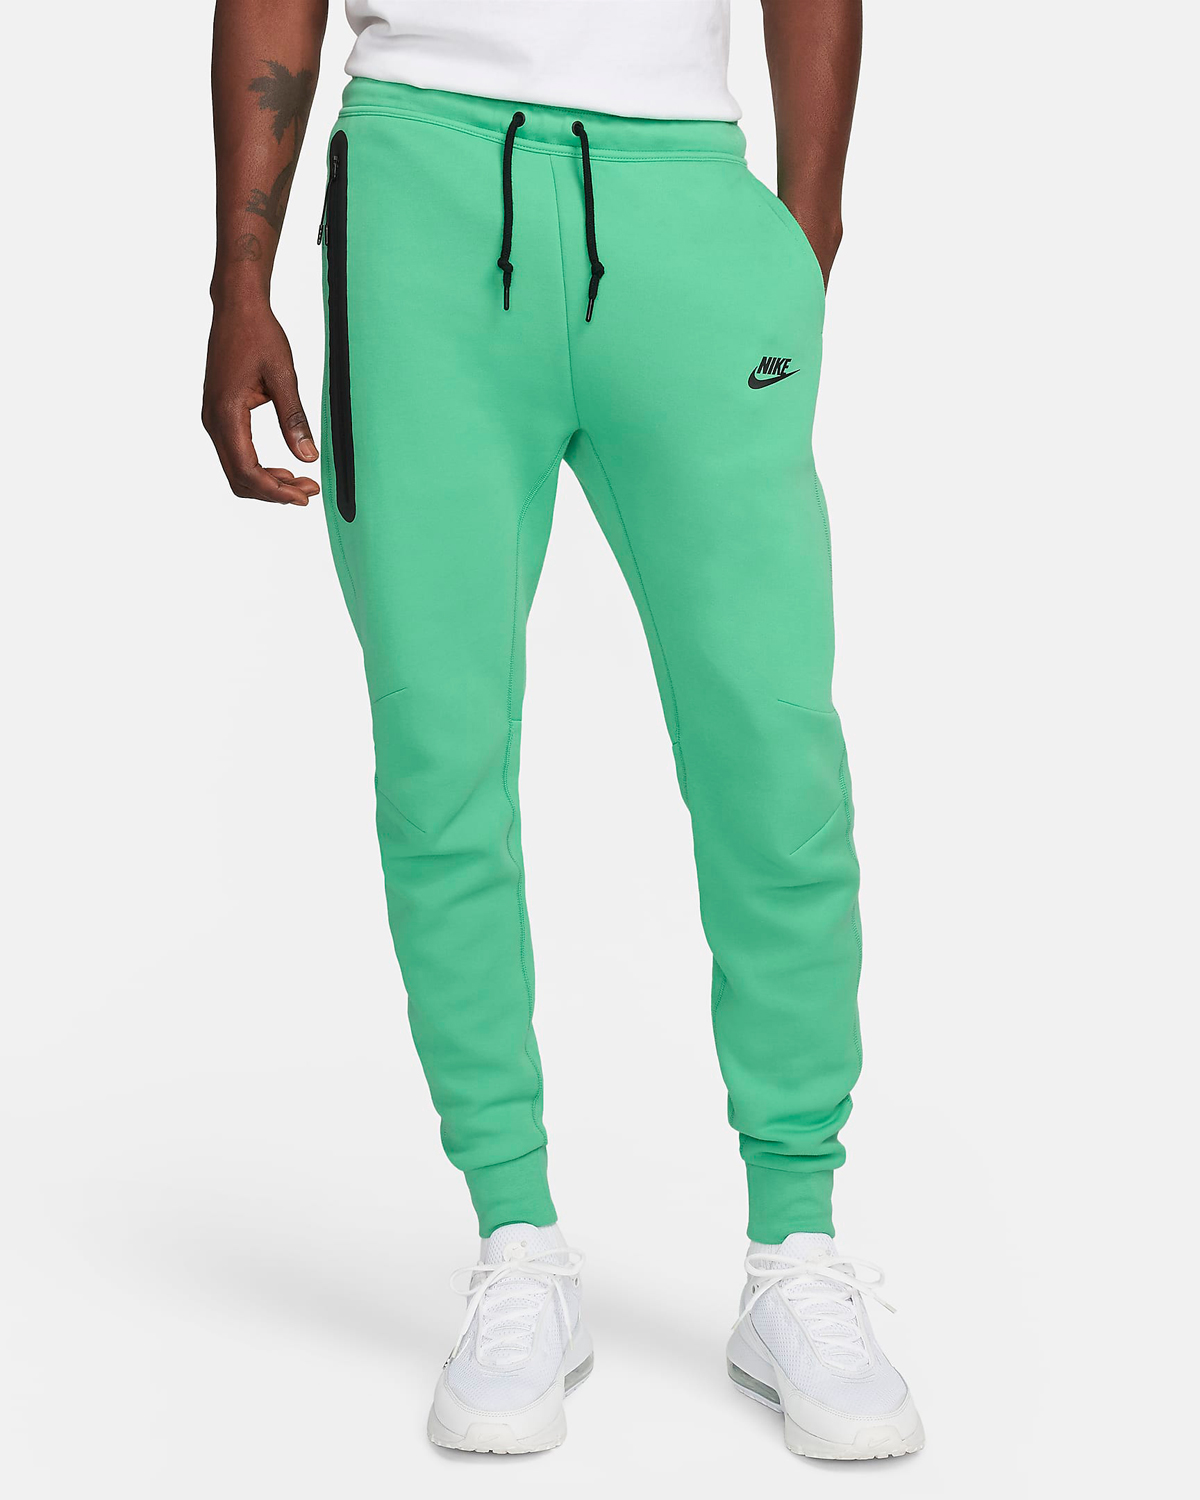 Nike-Tech-Fleece-Jogger-Pants-Green-Glow